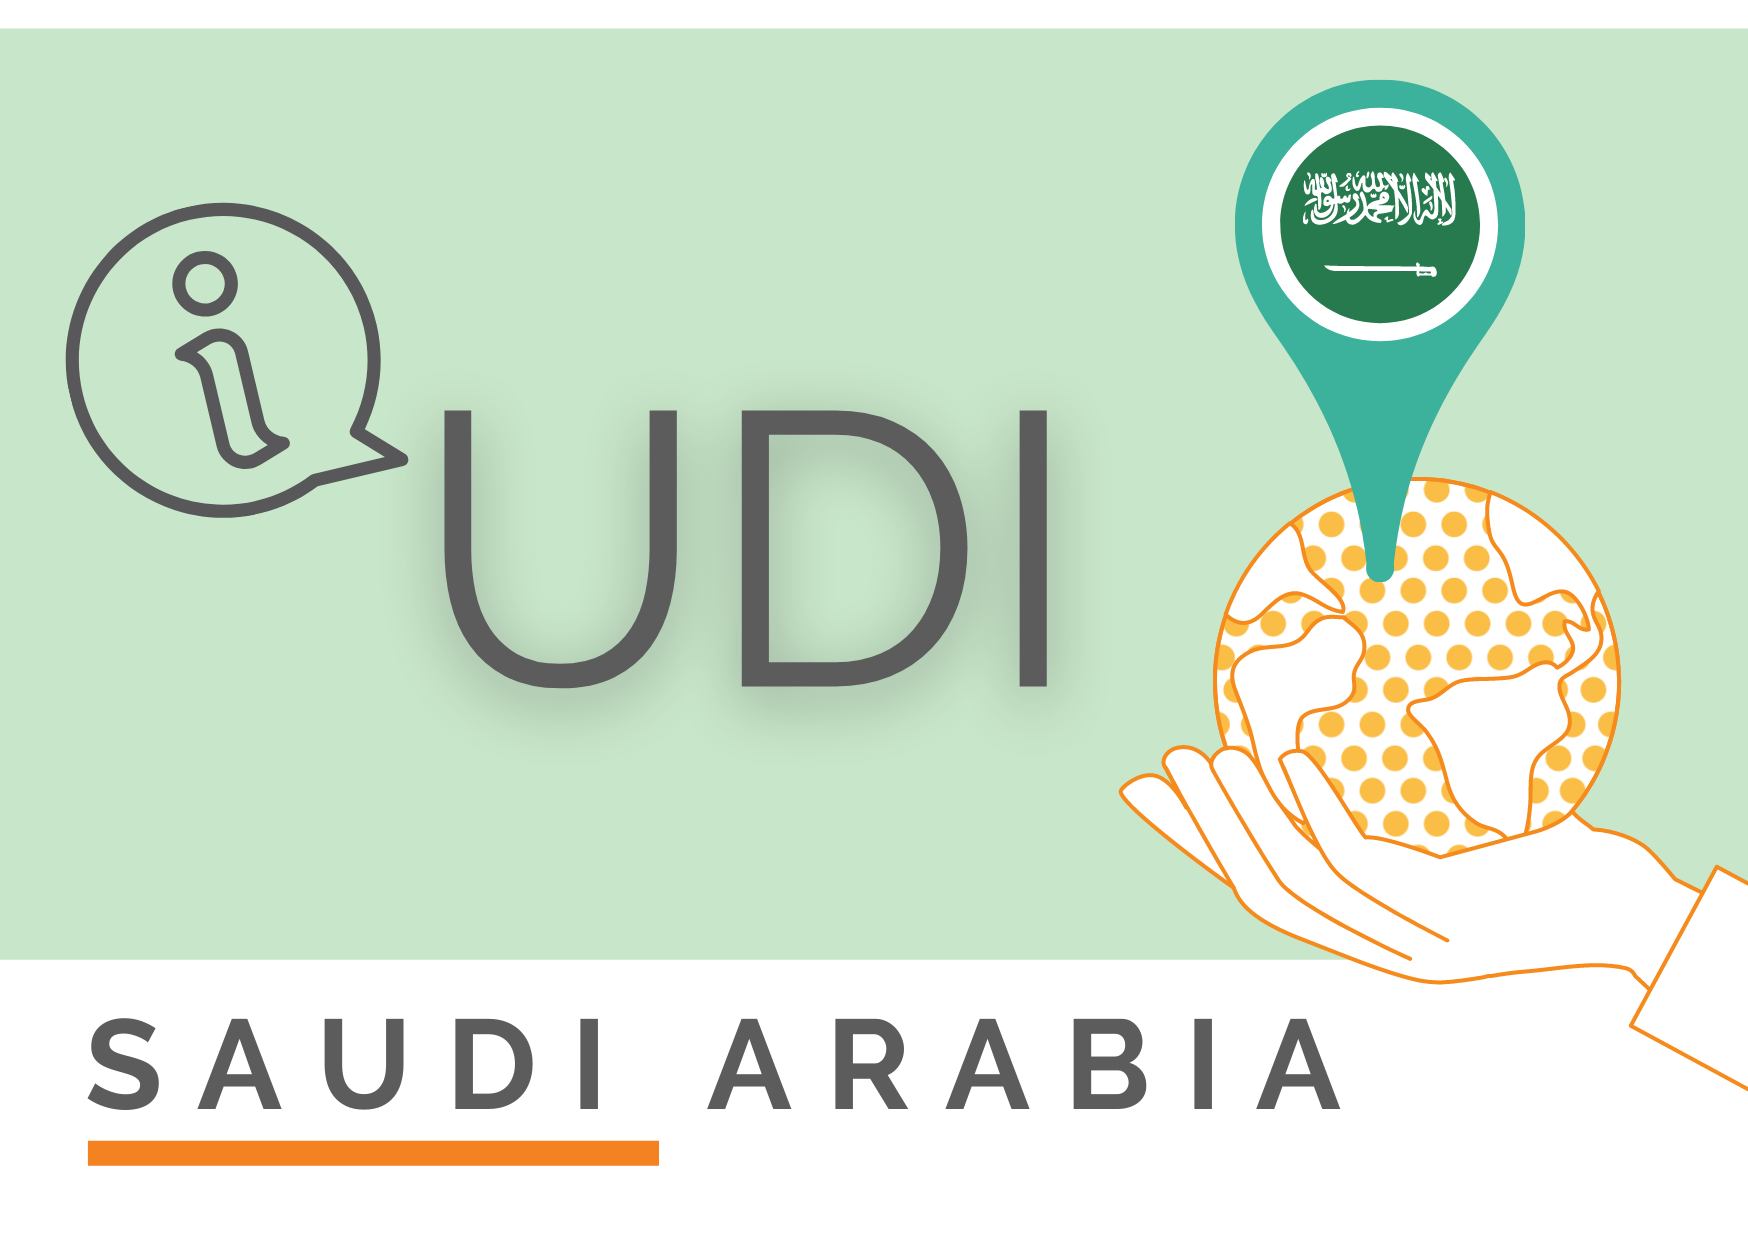 UDI Regulation in Saudi Arabia